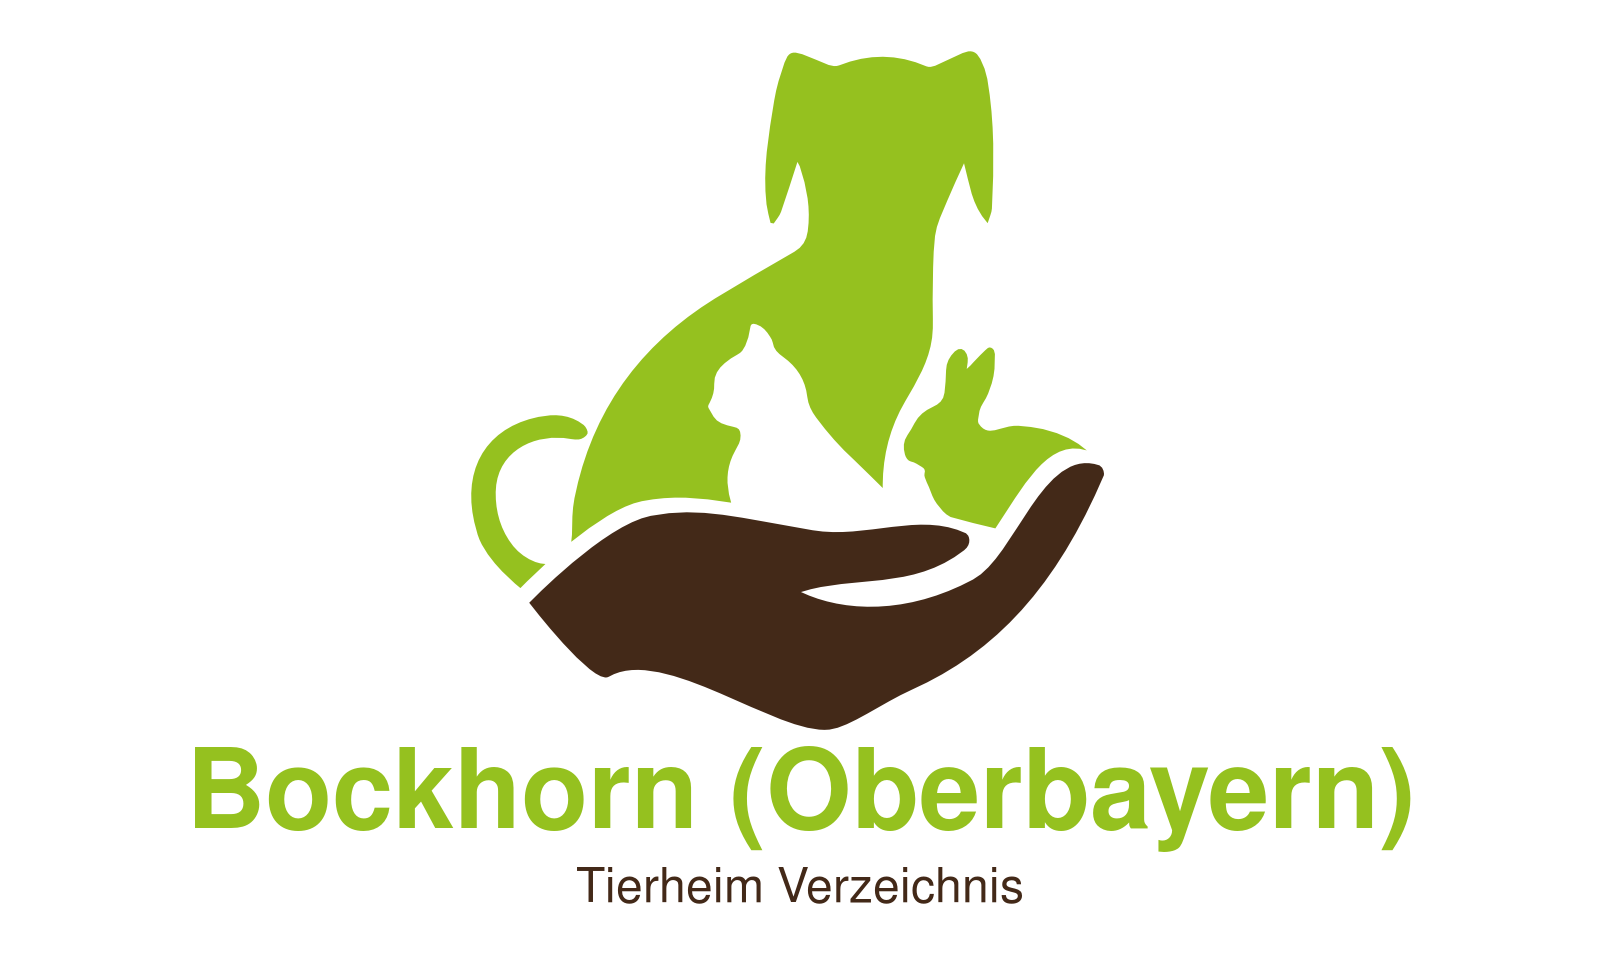 Tierheim Bockhorn (Oberbayern)